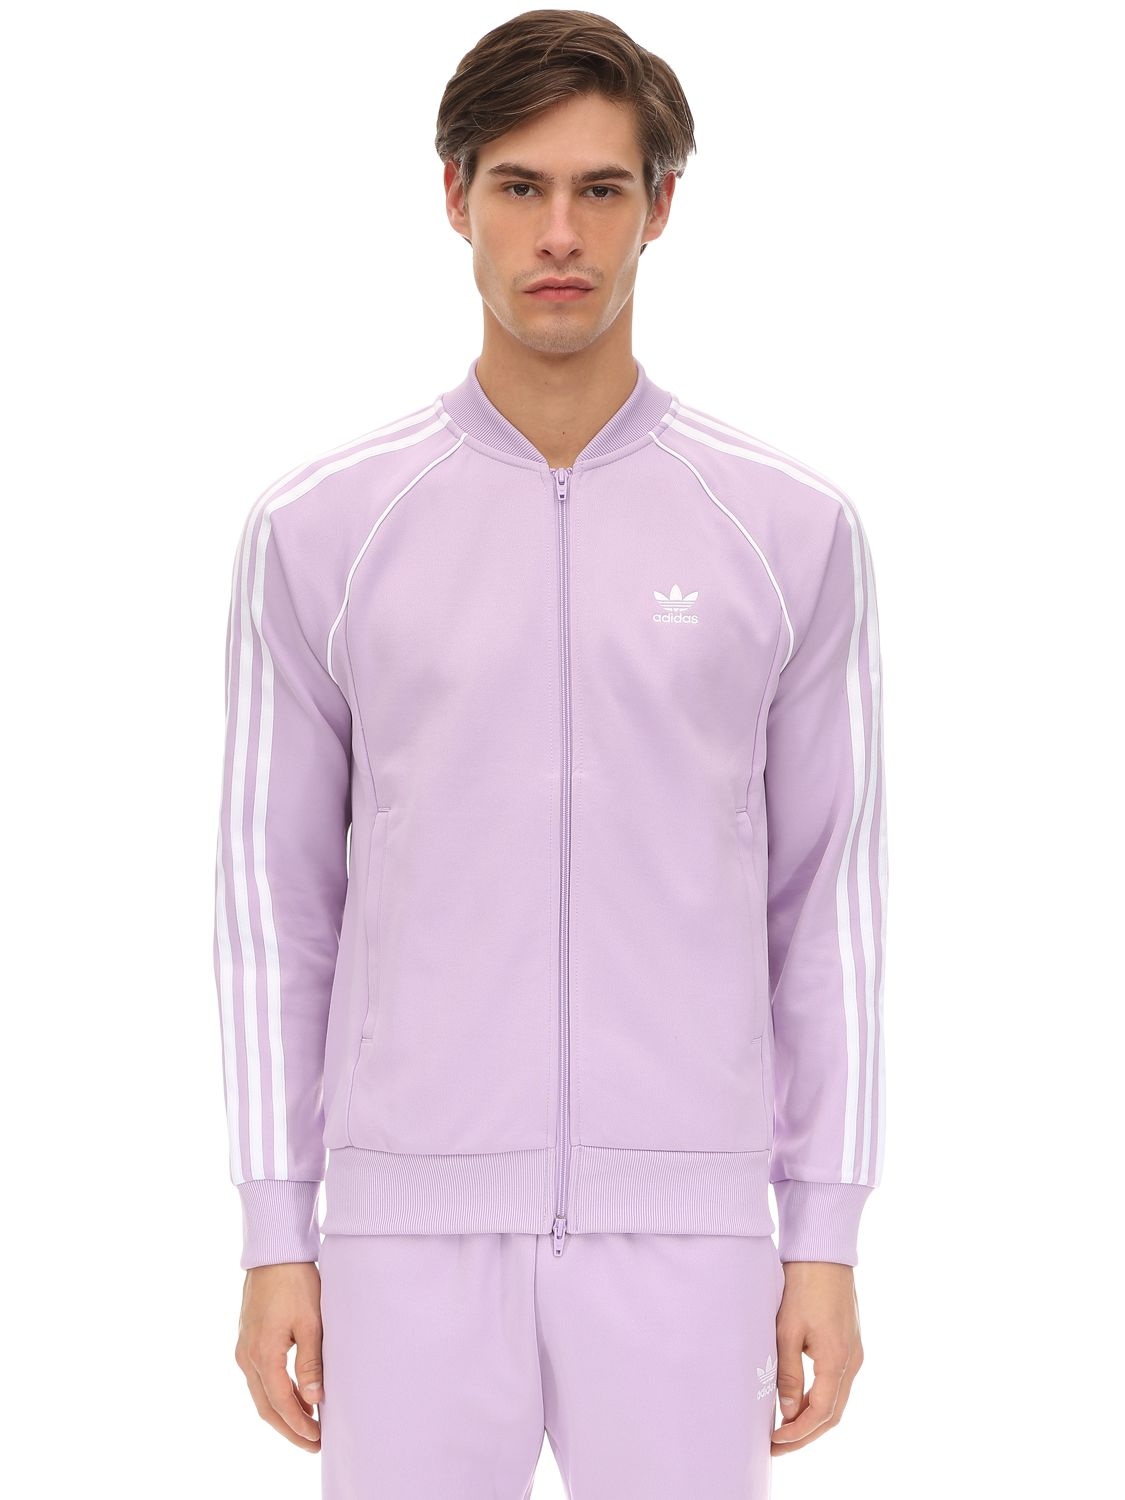 adidas lavender jacket